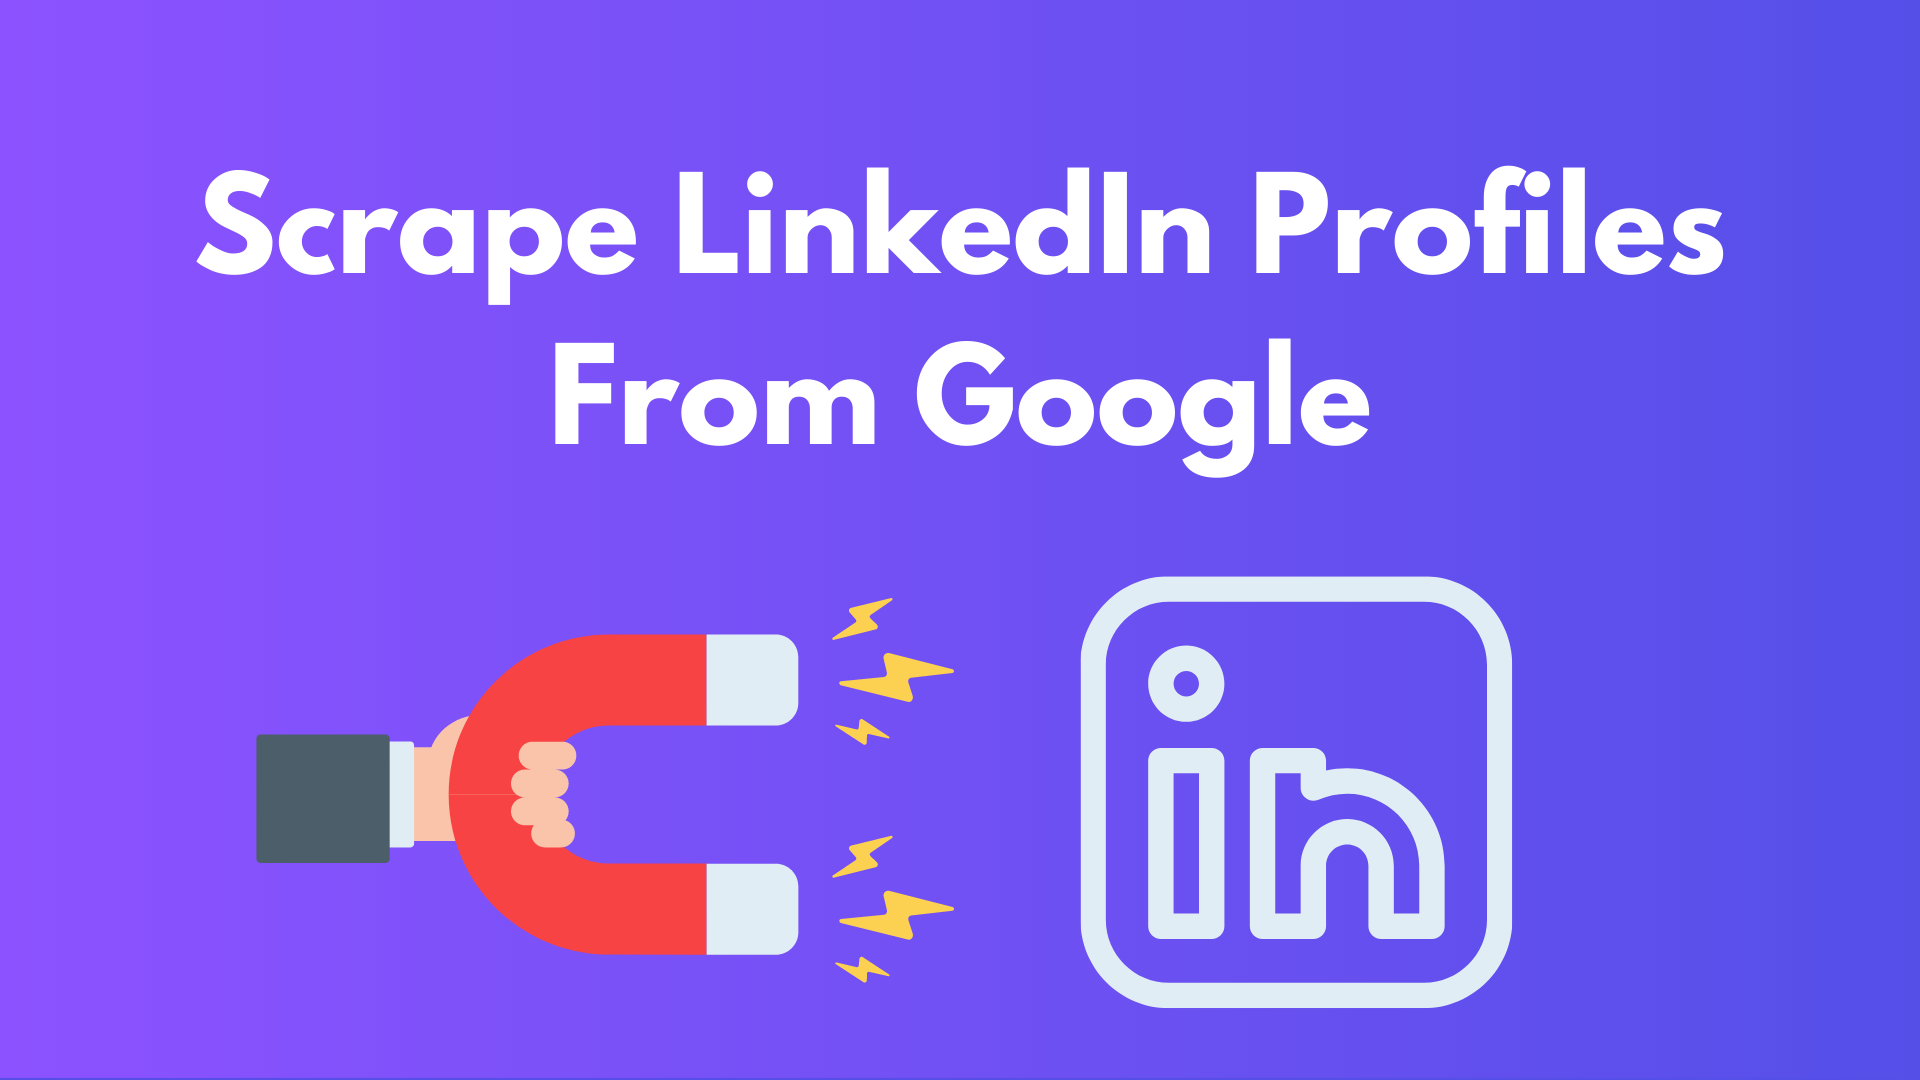 How to Scrape LinkedIn Profiles From Google